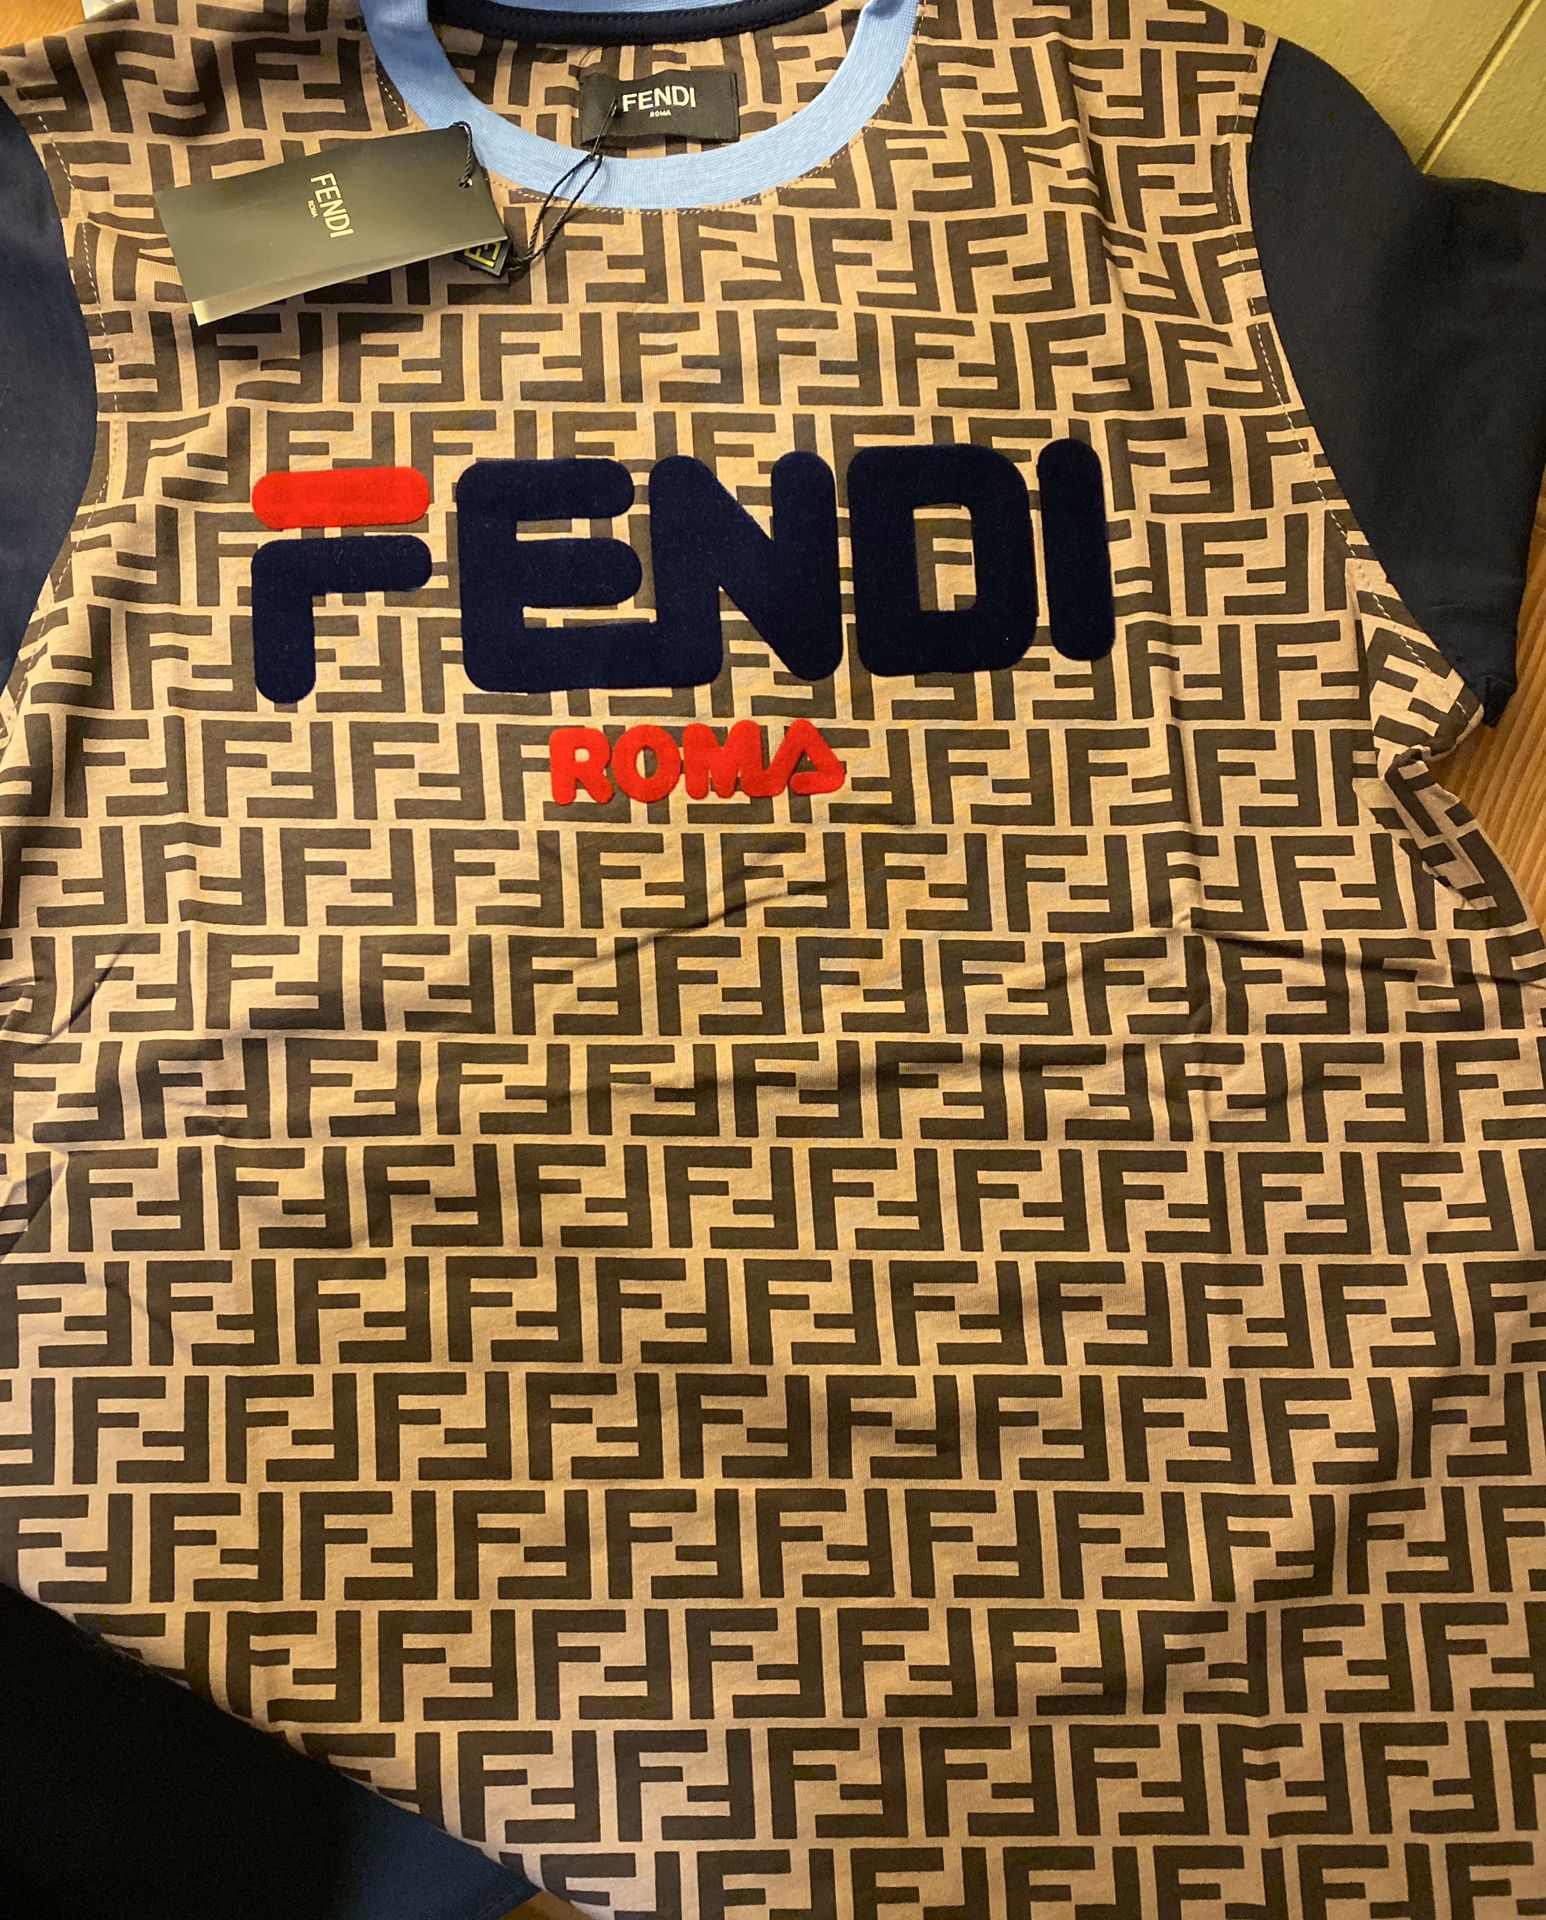 Brand new Fendi t-shirt